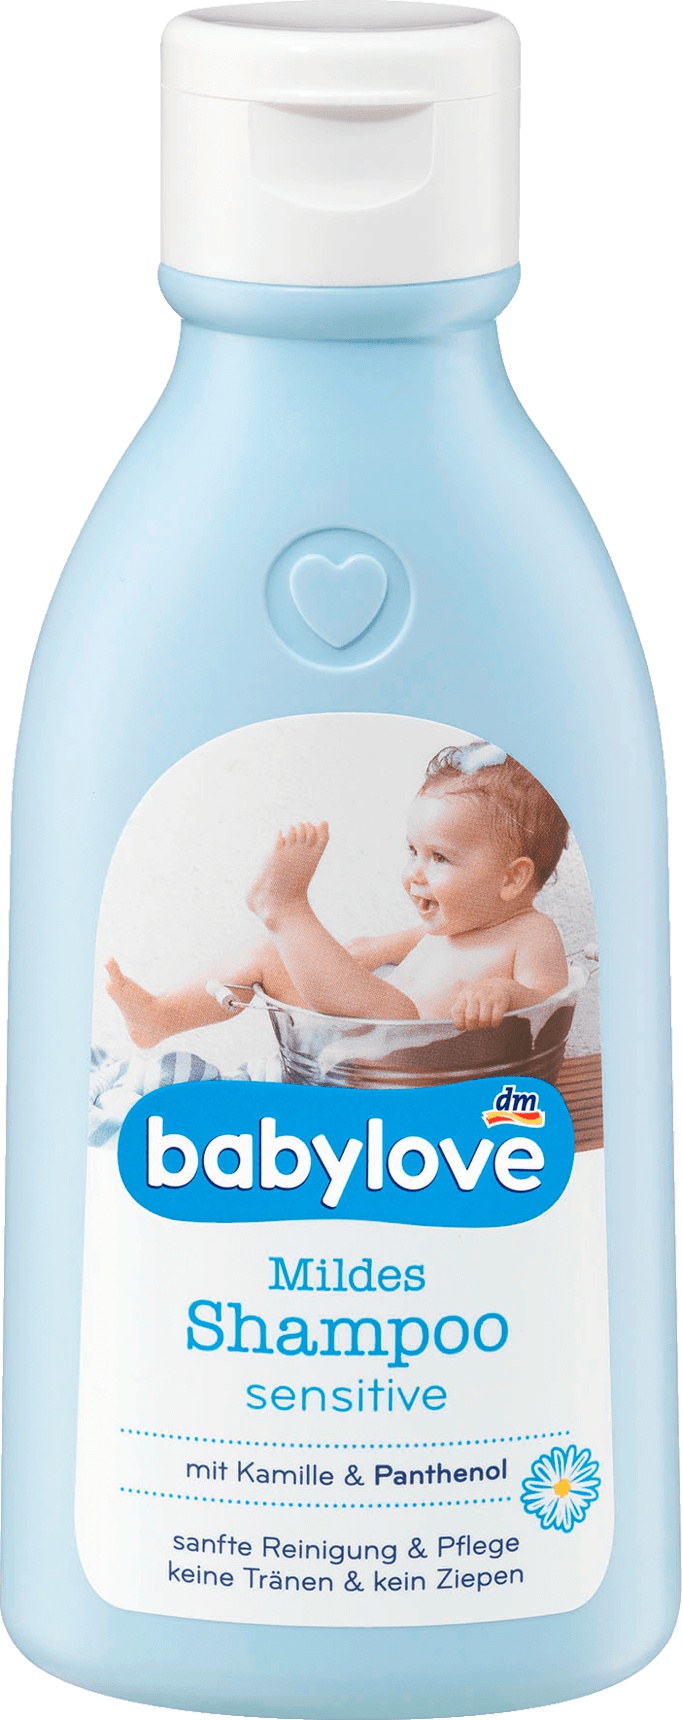 Babylove Baby Love Shampoo